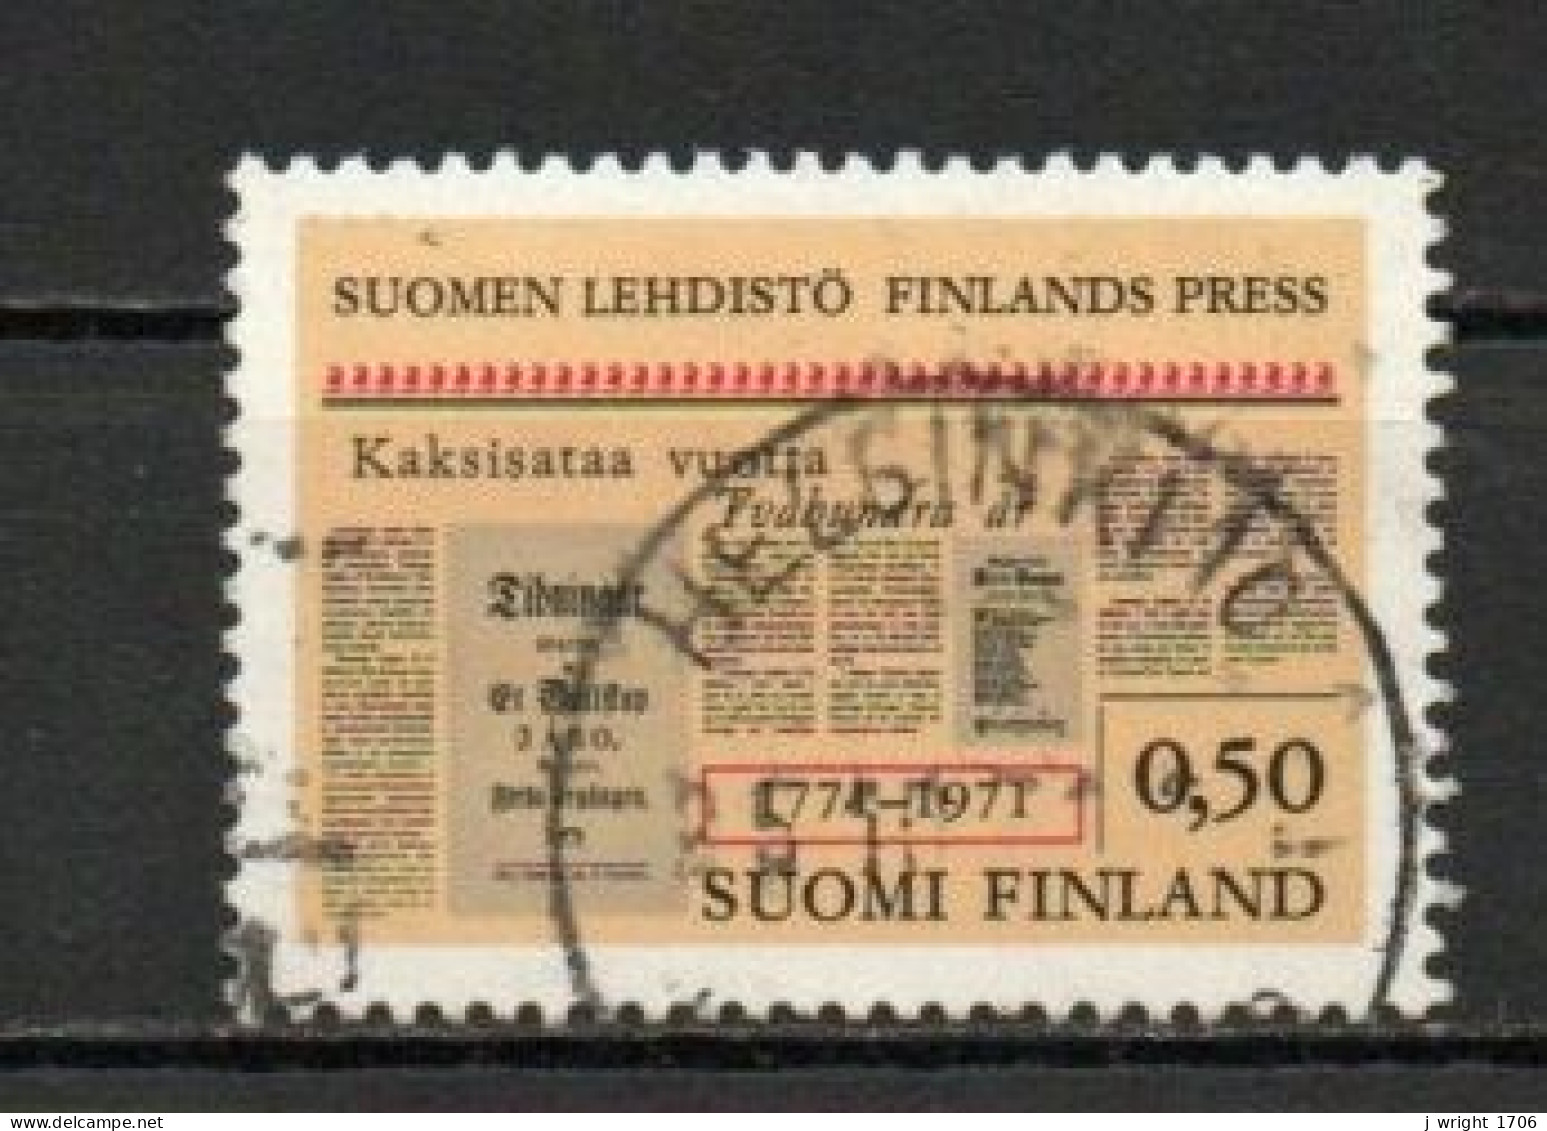 Finland, 1971, Finnish Press 200th Anniv, 0.50mk, USED - Usados